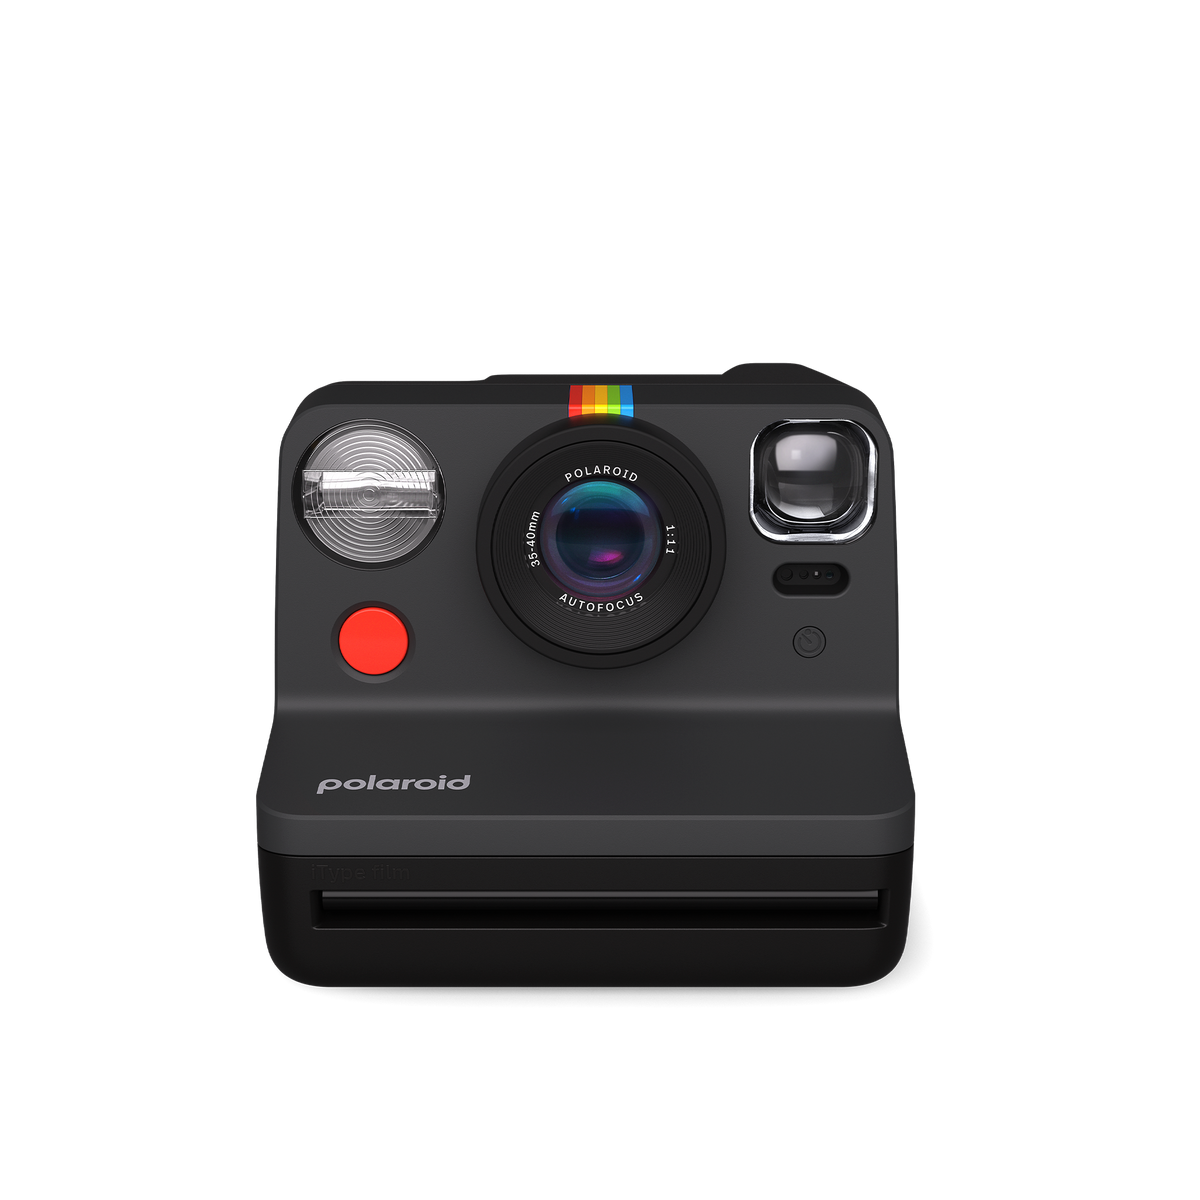 Polaroid Now - Generation 2 i-Type Instant Camera Everything Box - Golden Moments - Black